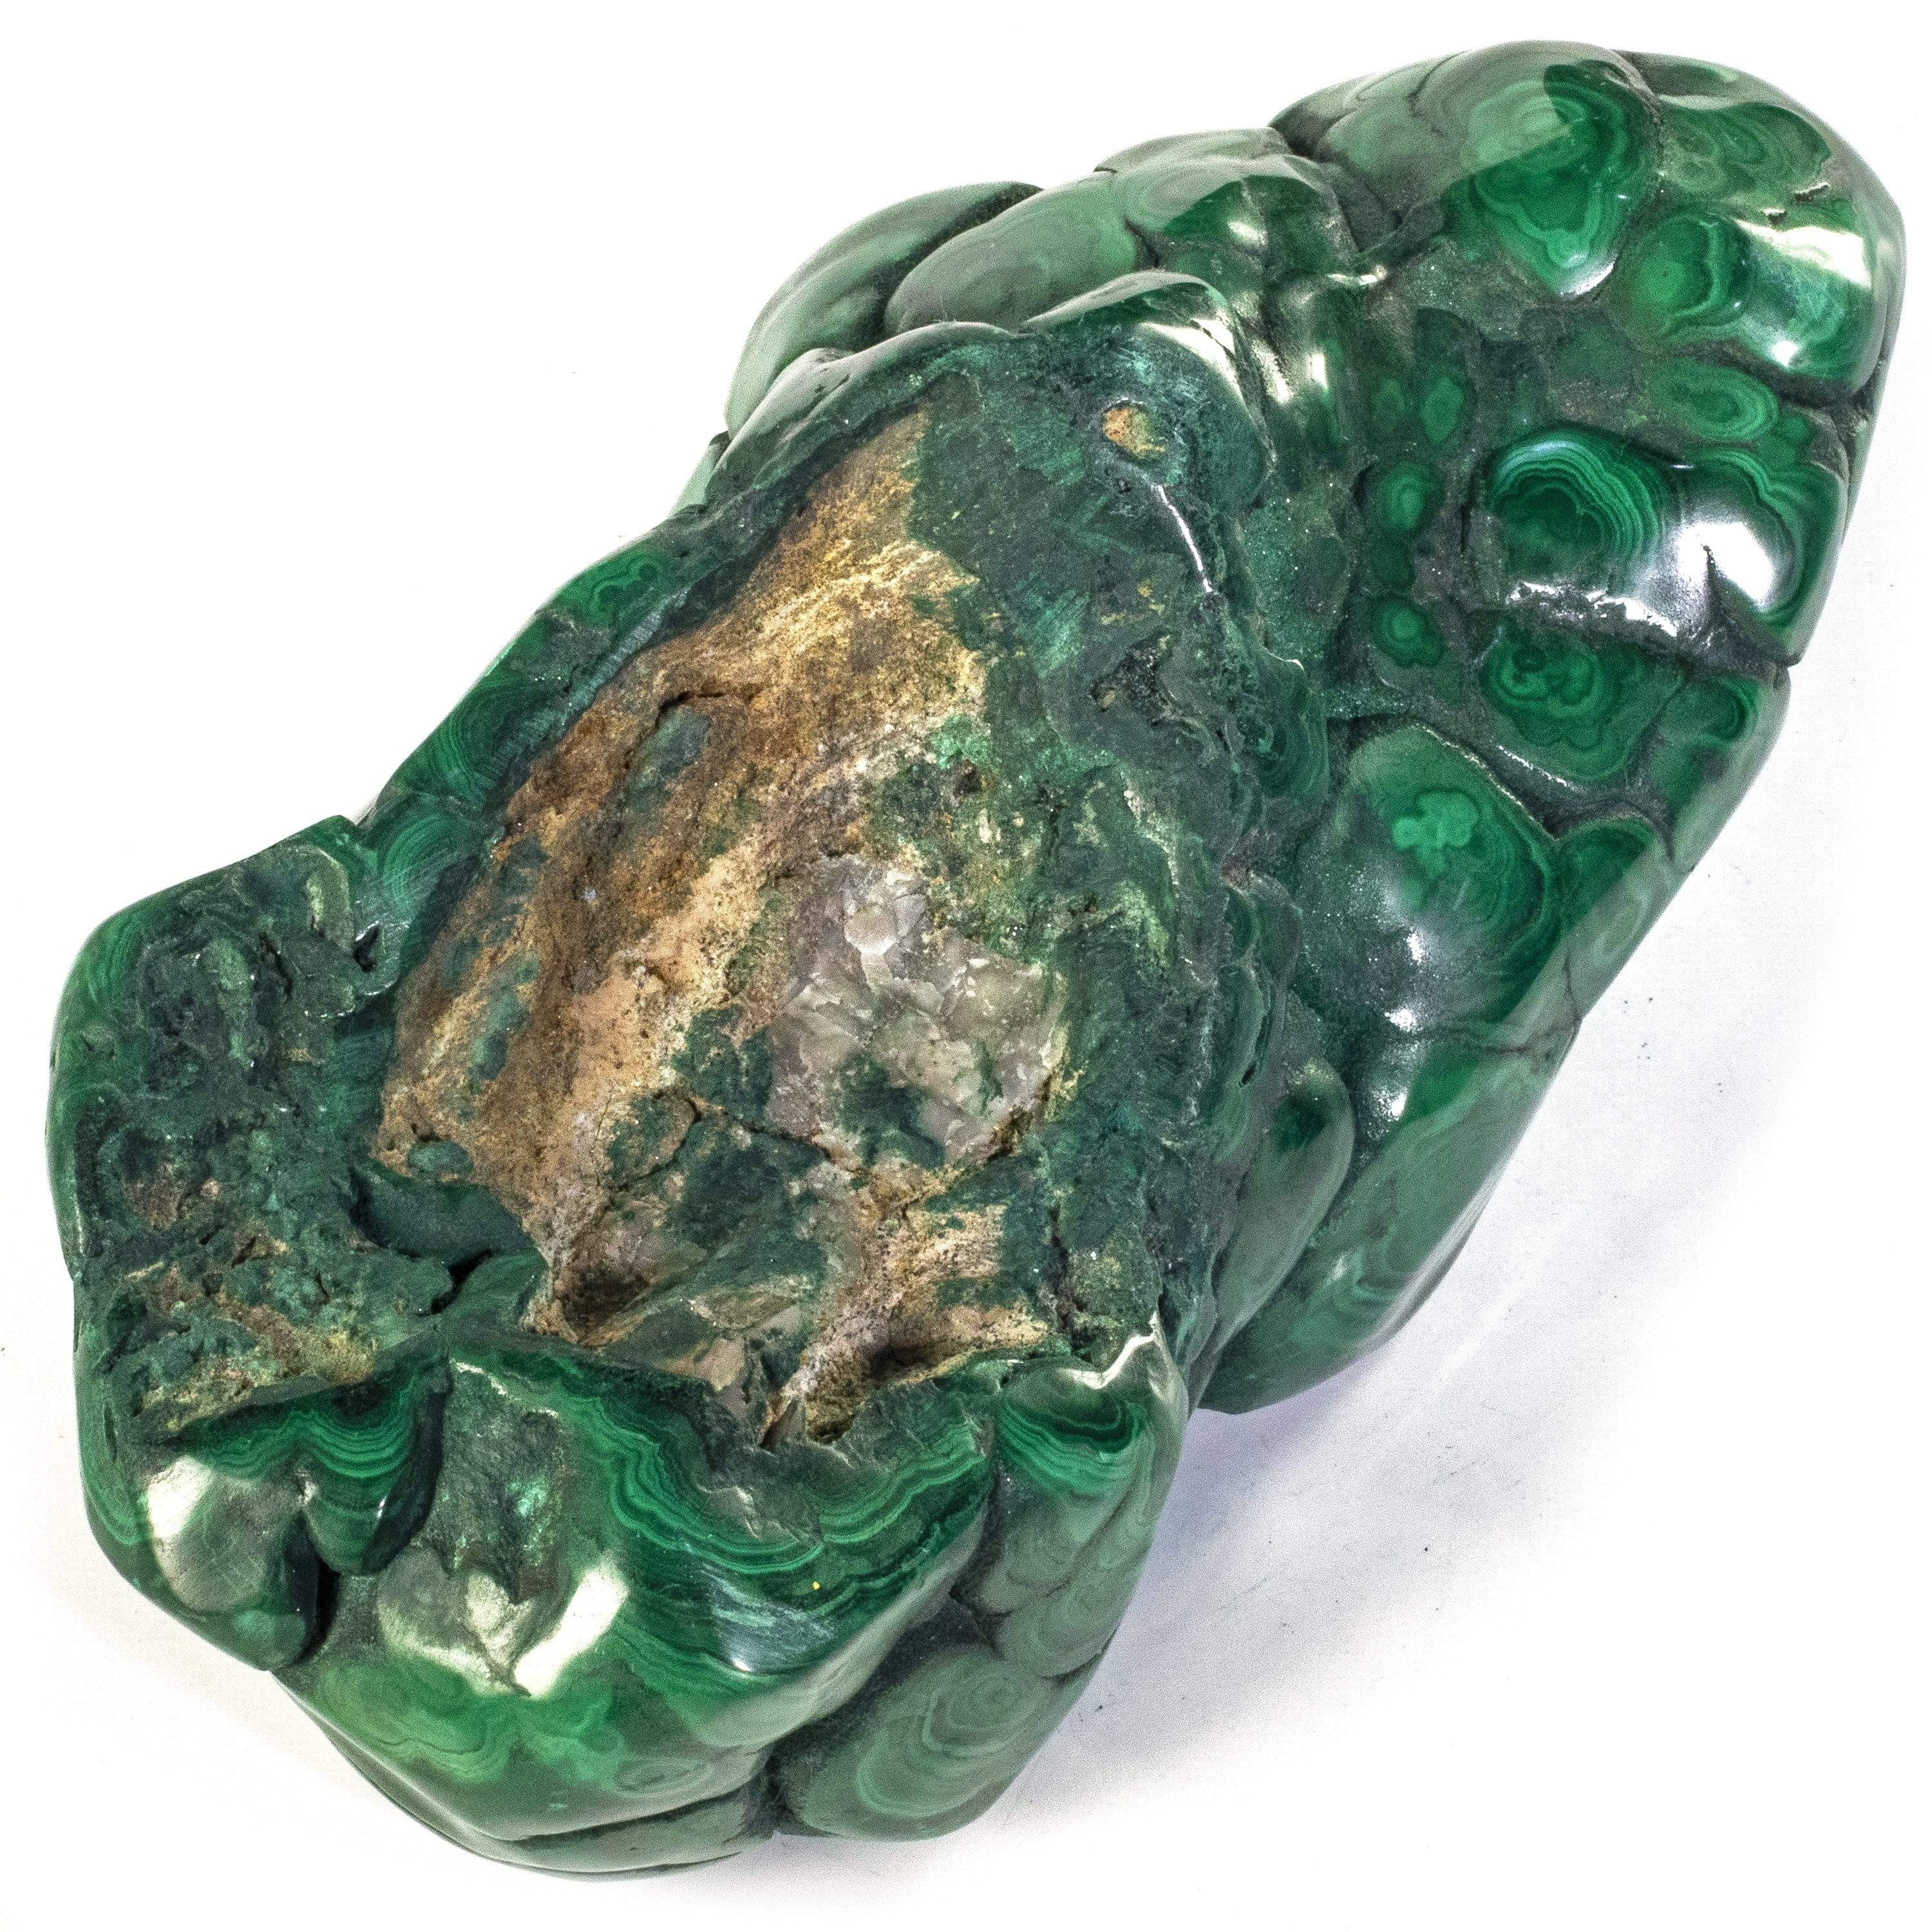 Kalifano Malachite Rare Natural Green Malachite Polished Freeform Specimen from Congo - 3.1 kg / 6.8 lbs MA2000.004